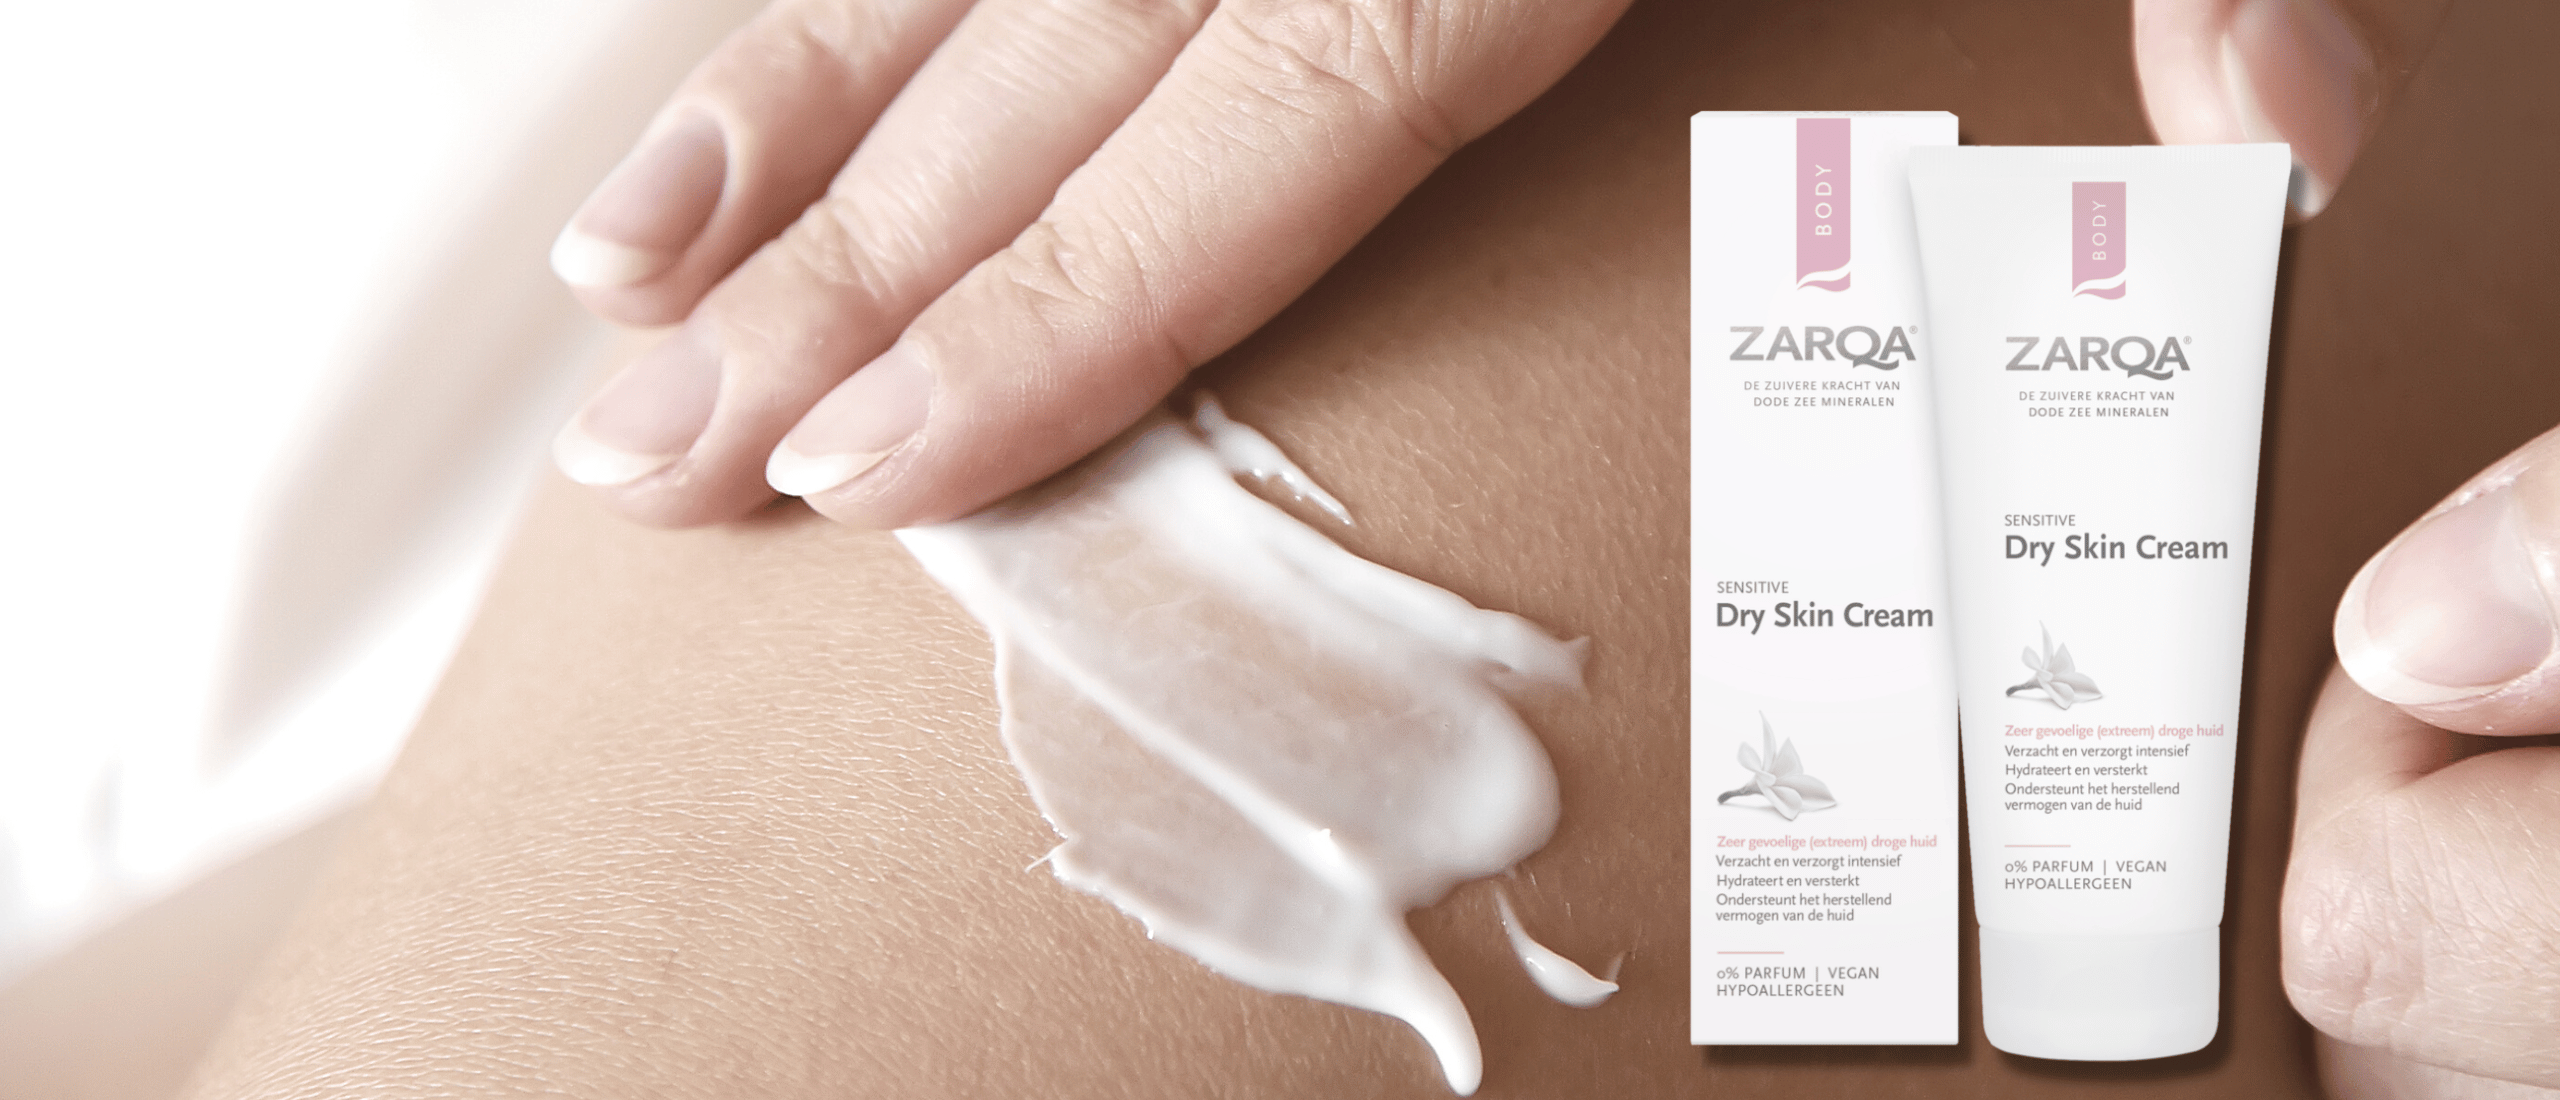 ZARQA Dry Skin Cream review